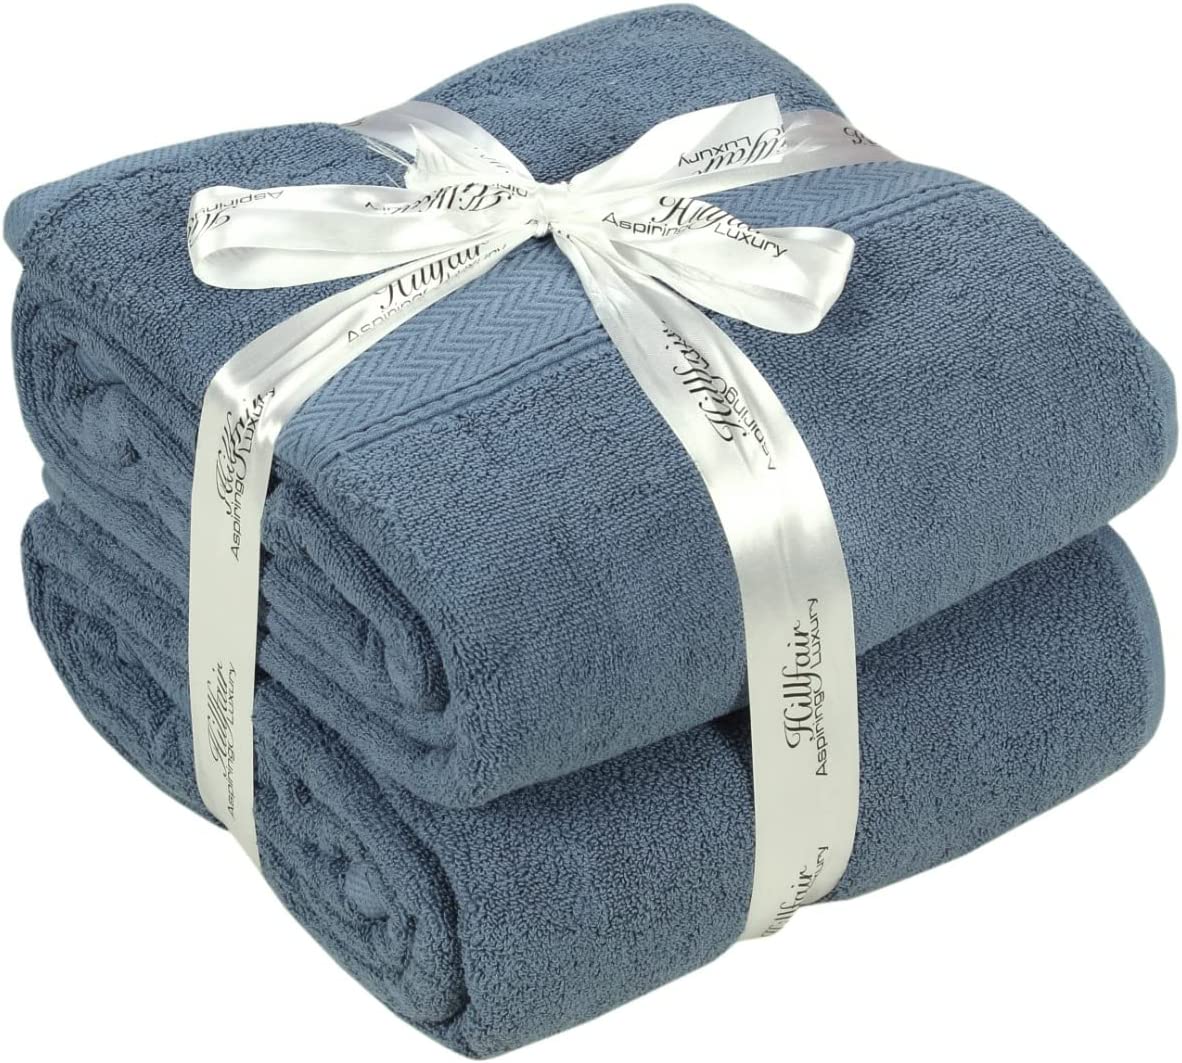 6-Piece Premium Towel Set, 2 Bath Towels, 2 Hand Towels, and 2